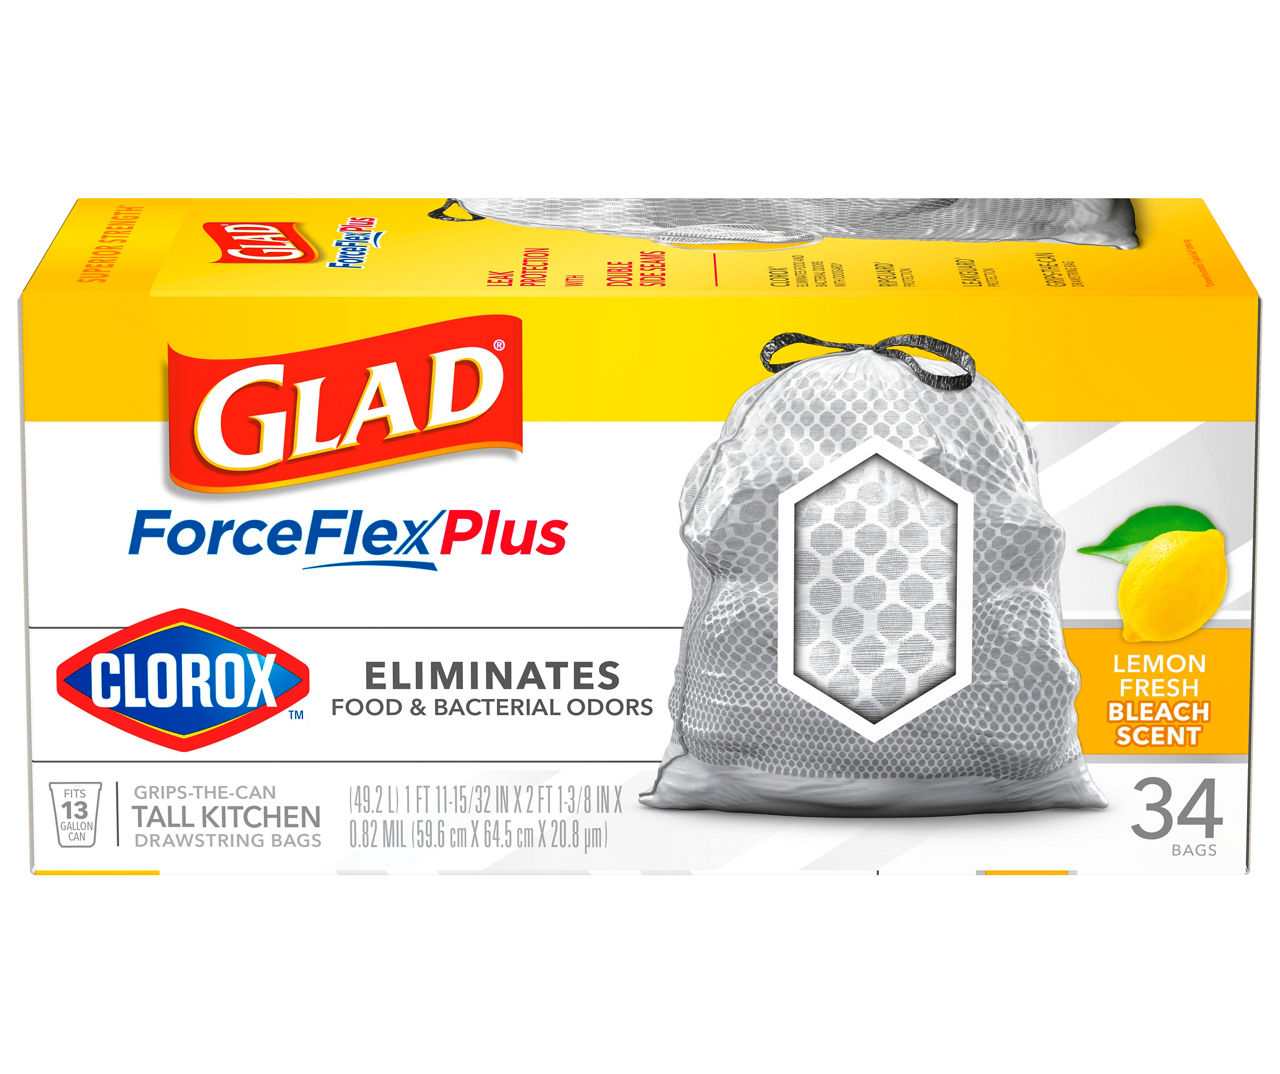 Glad Force Flex 13 Gal. Drawstring Trash Bags Original Scent with